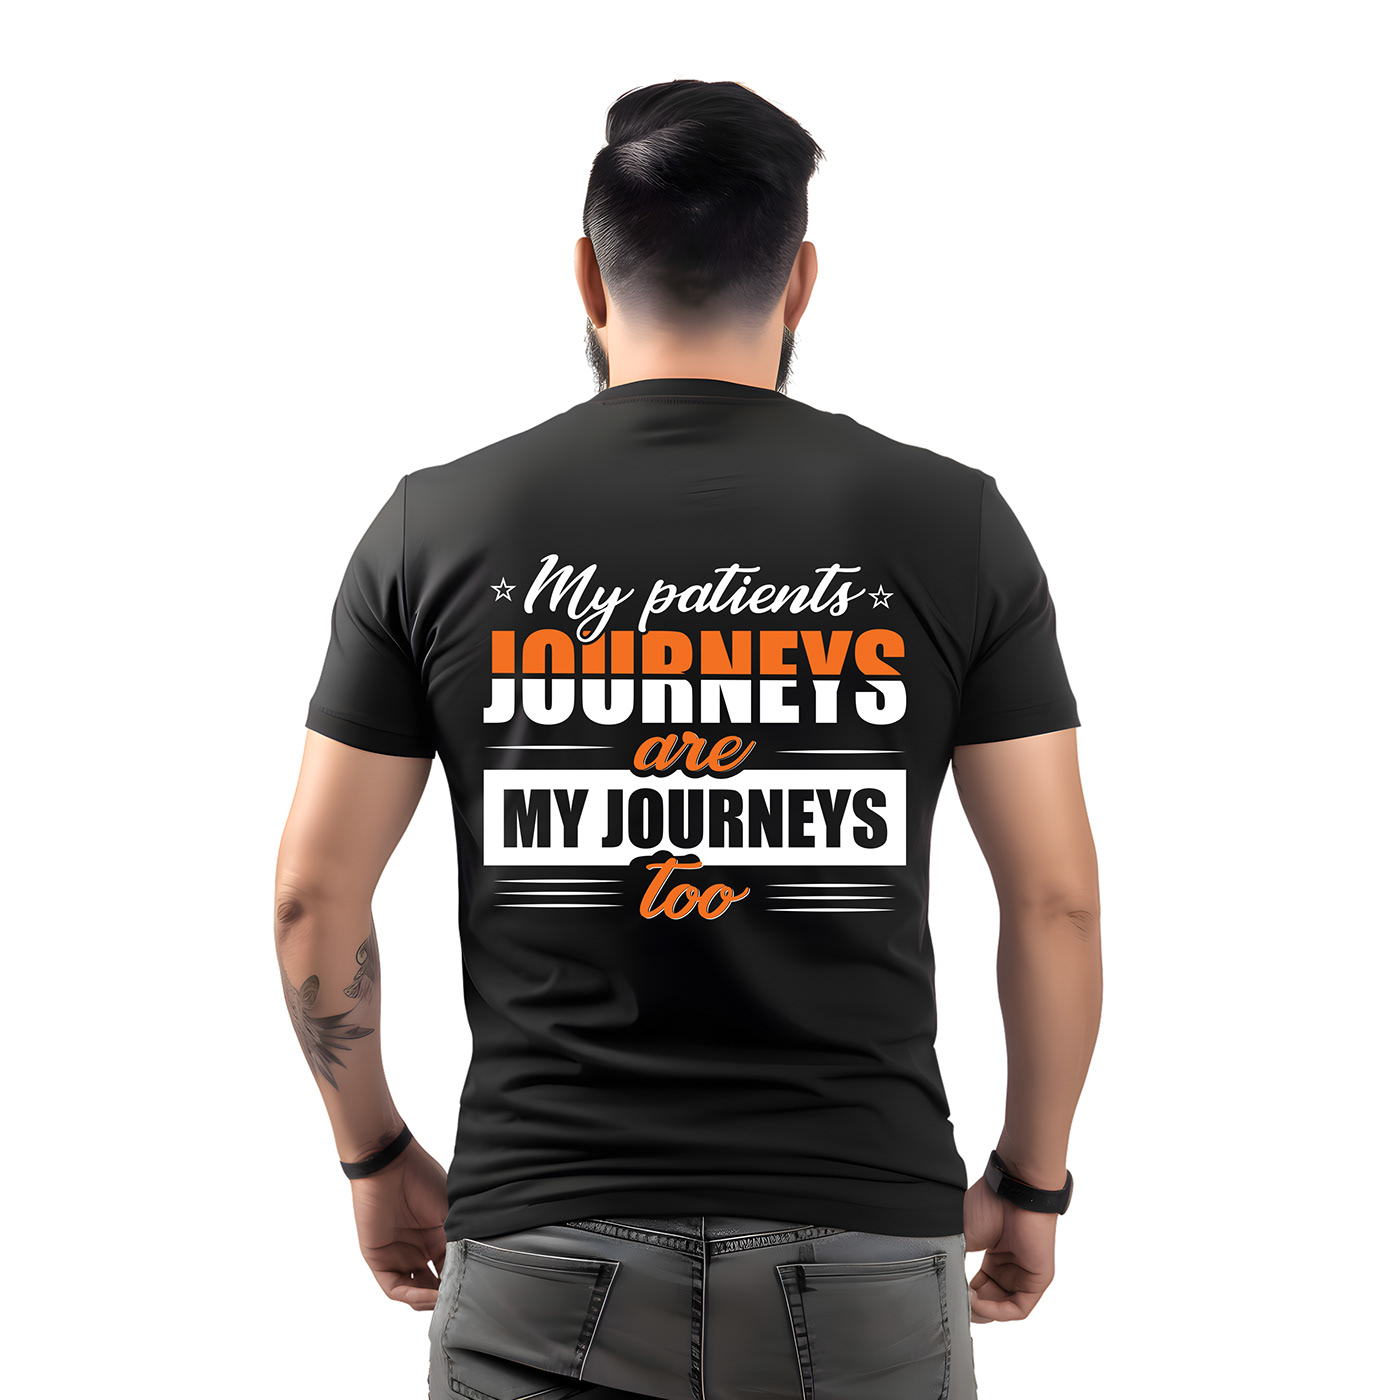 My-Patients-Journeys-are-My-Journeys-Too Typography T-Shirt Design
